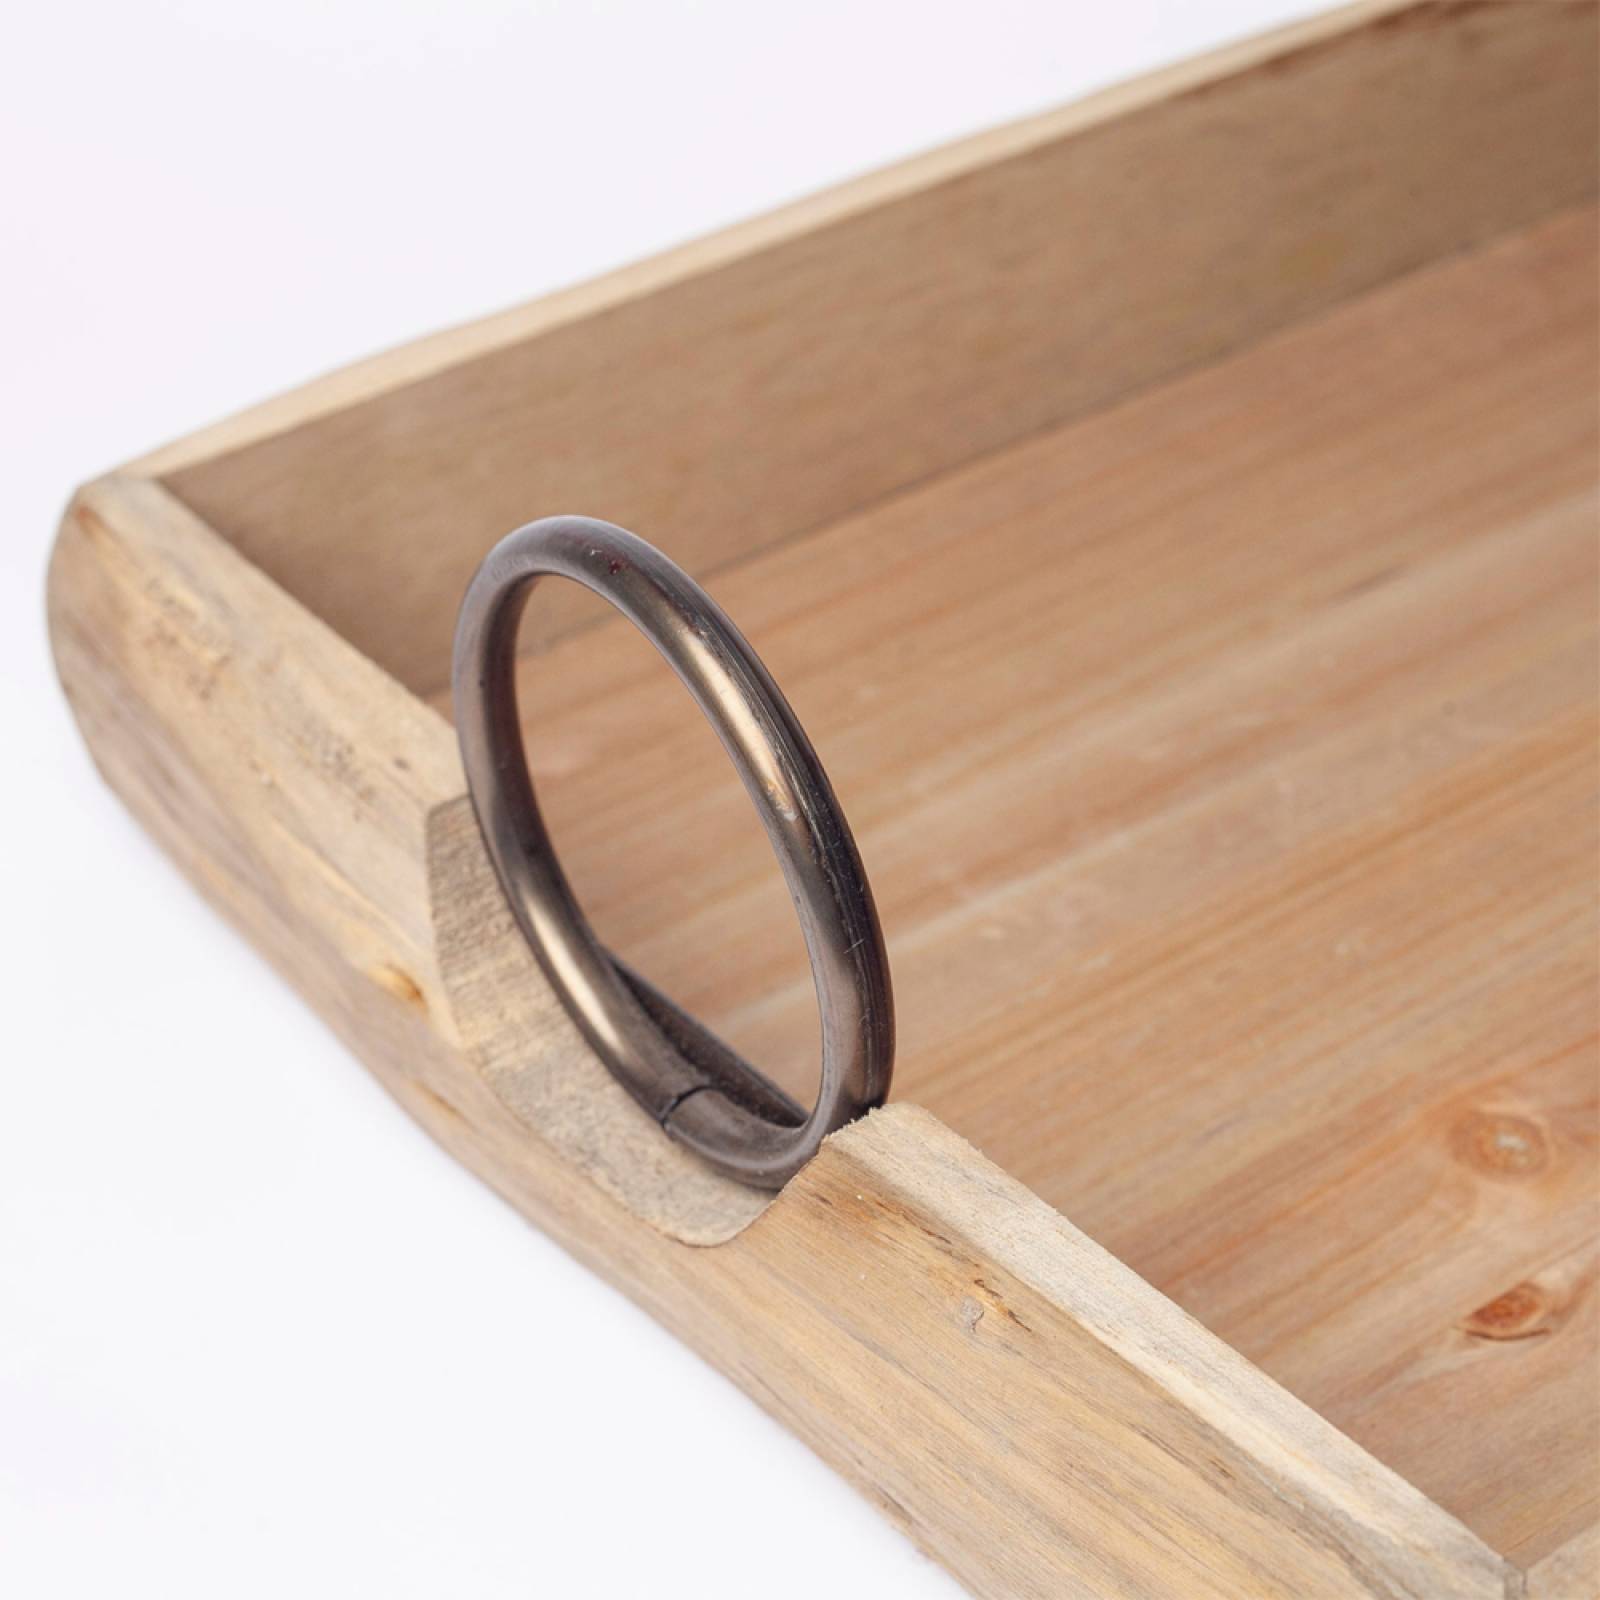 Rustic Rectangular Wooden Tray With Circular Metal Handles thumbnails